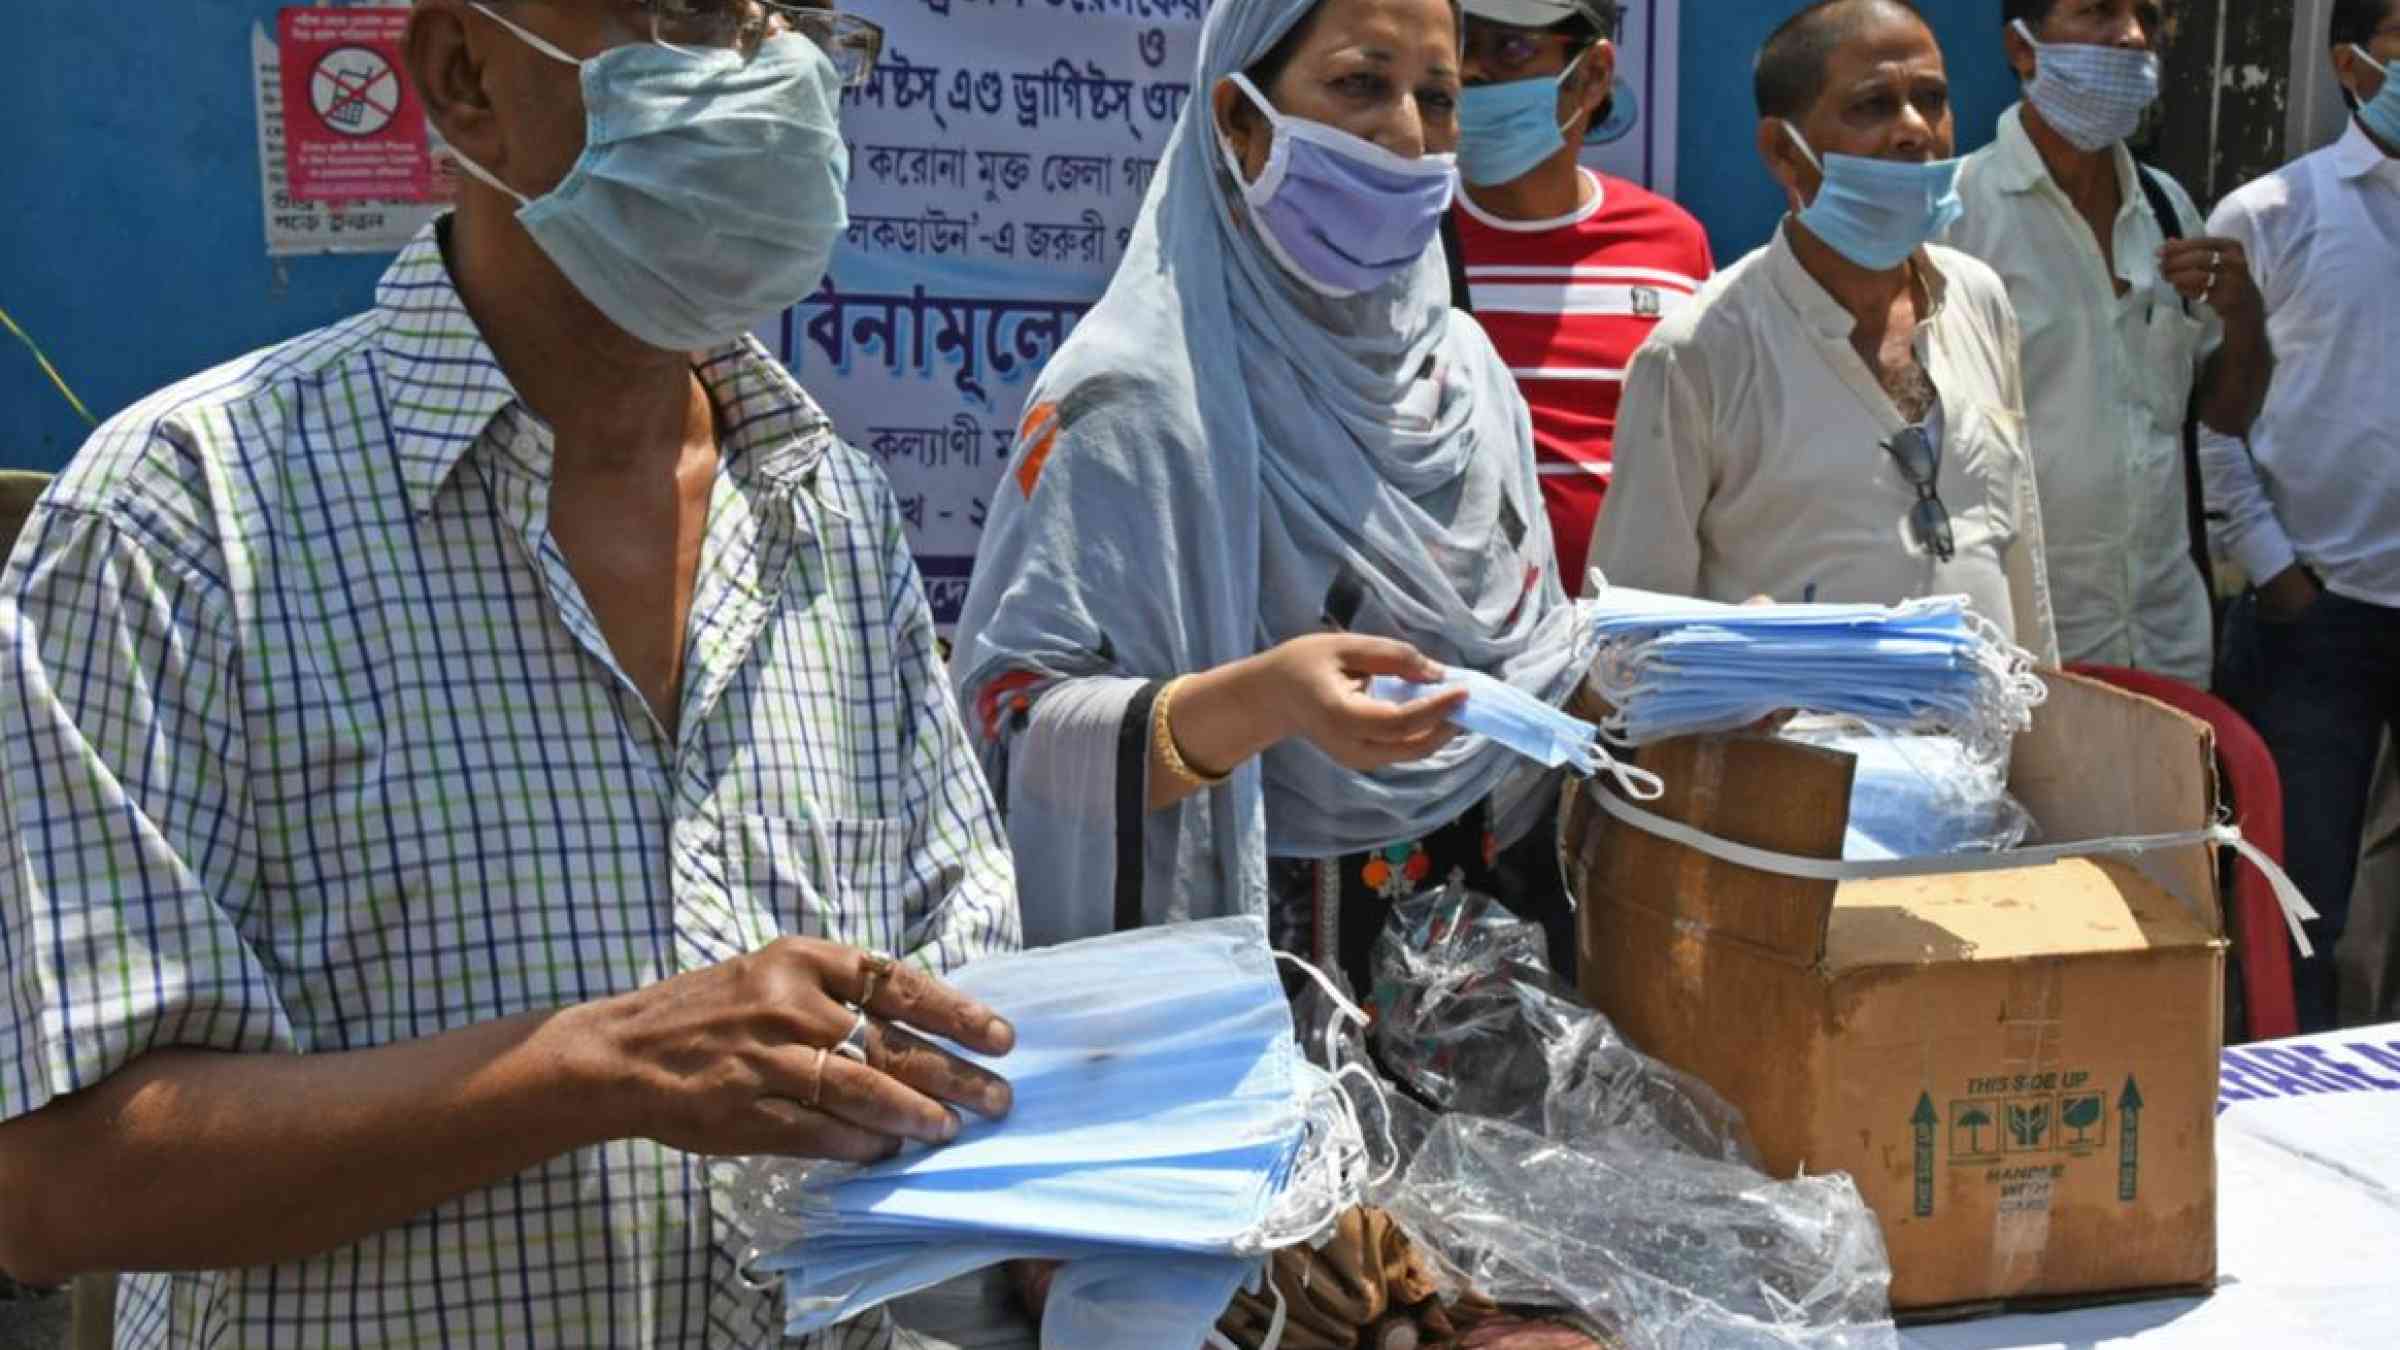 Associations distributing free masks in West Bengal, India (2020). Sanjoy Karmakar/Shutterstock